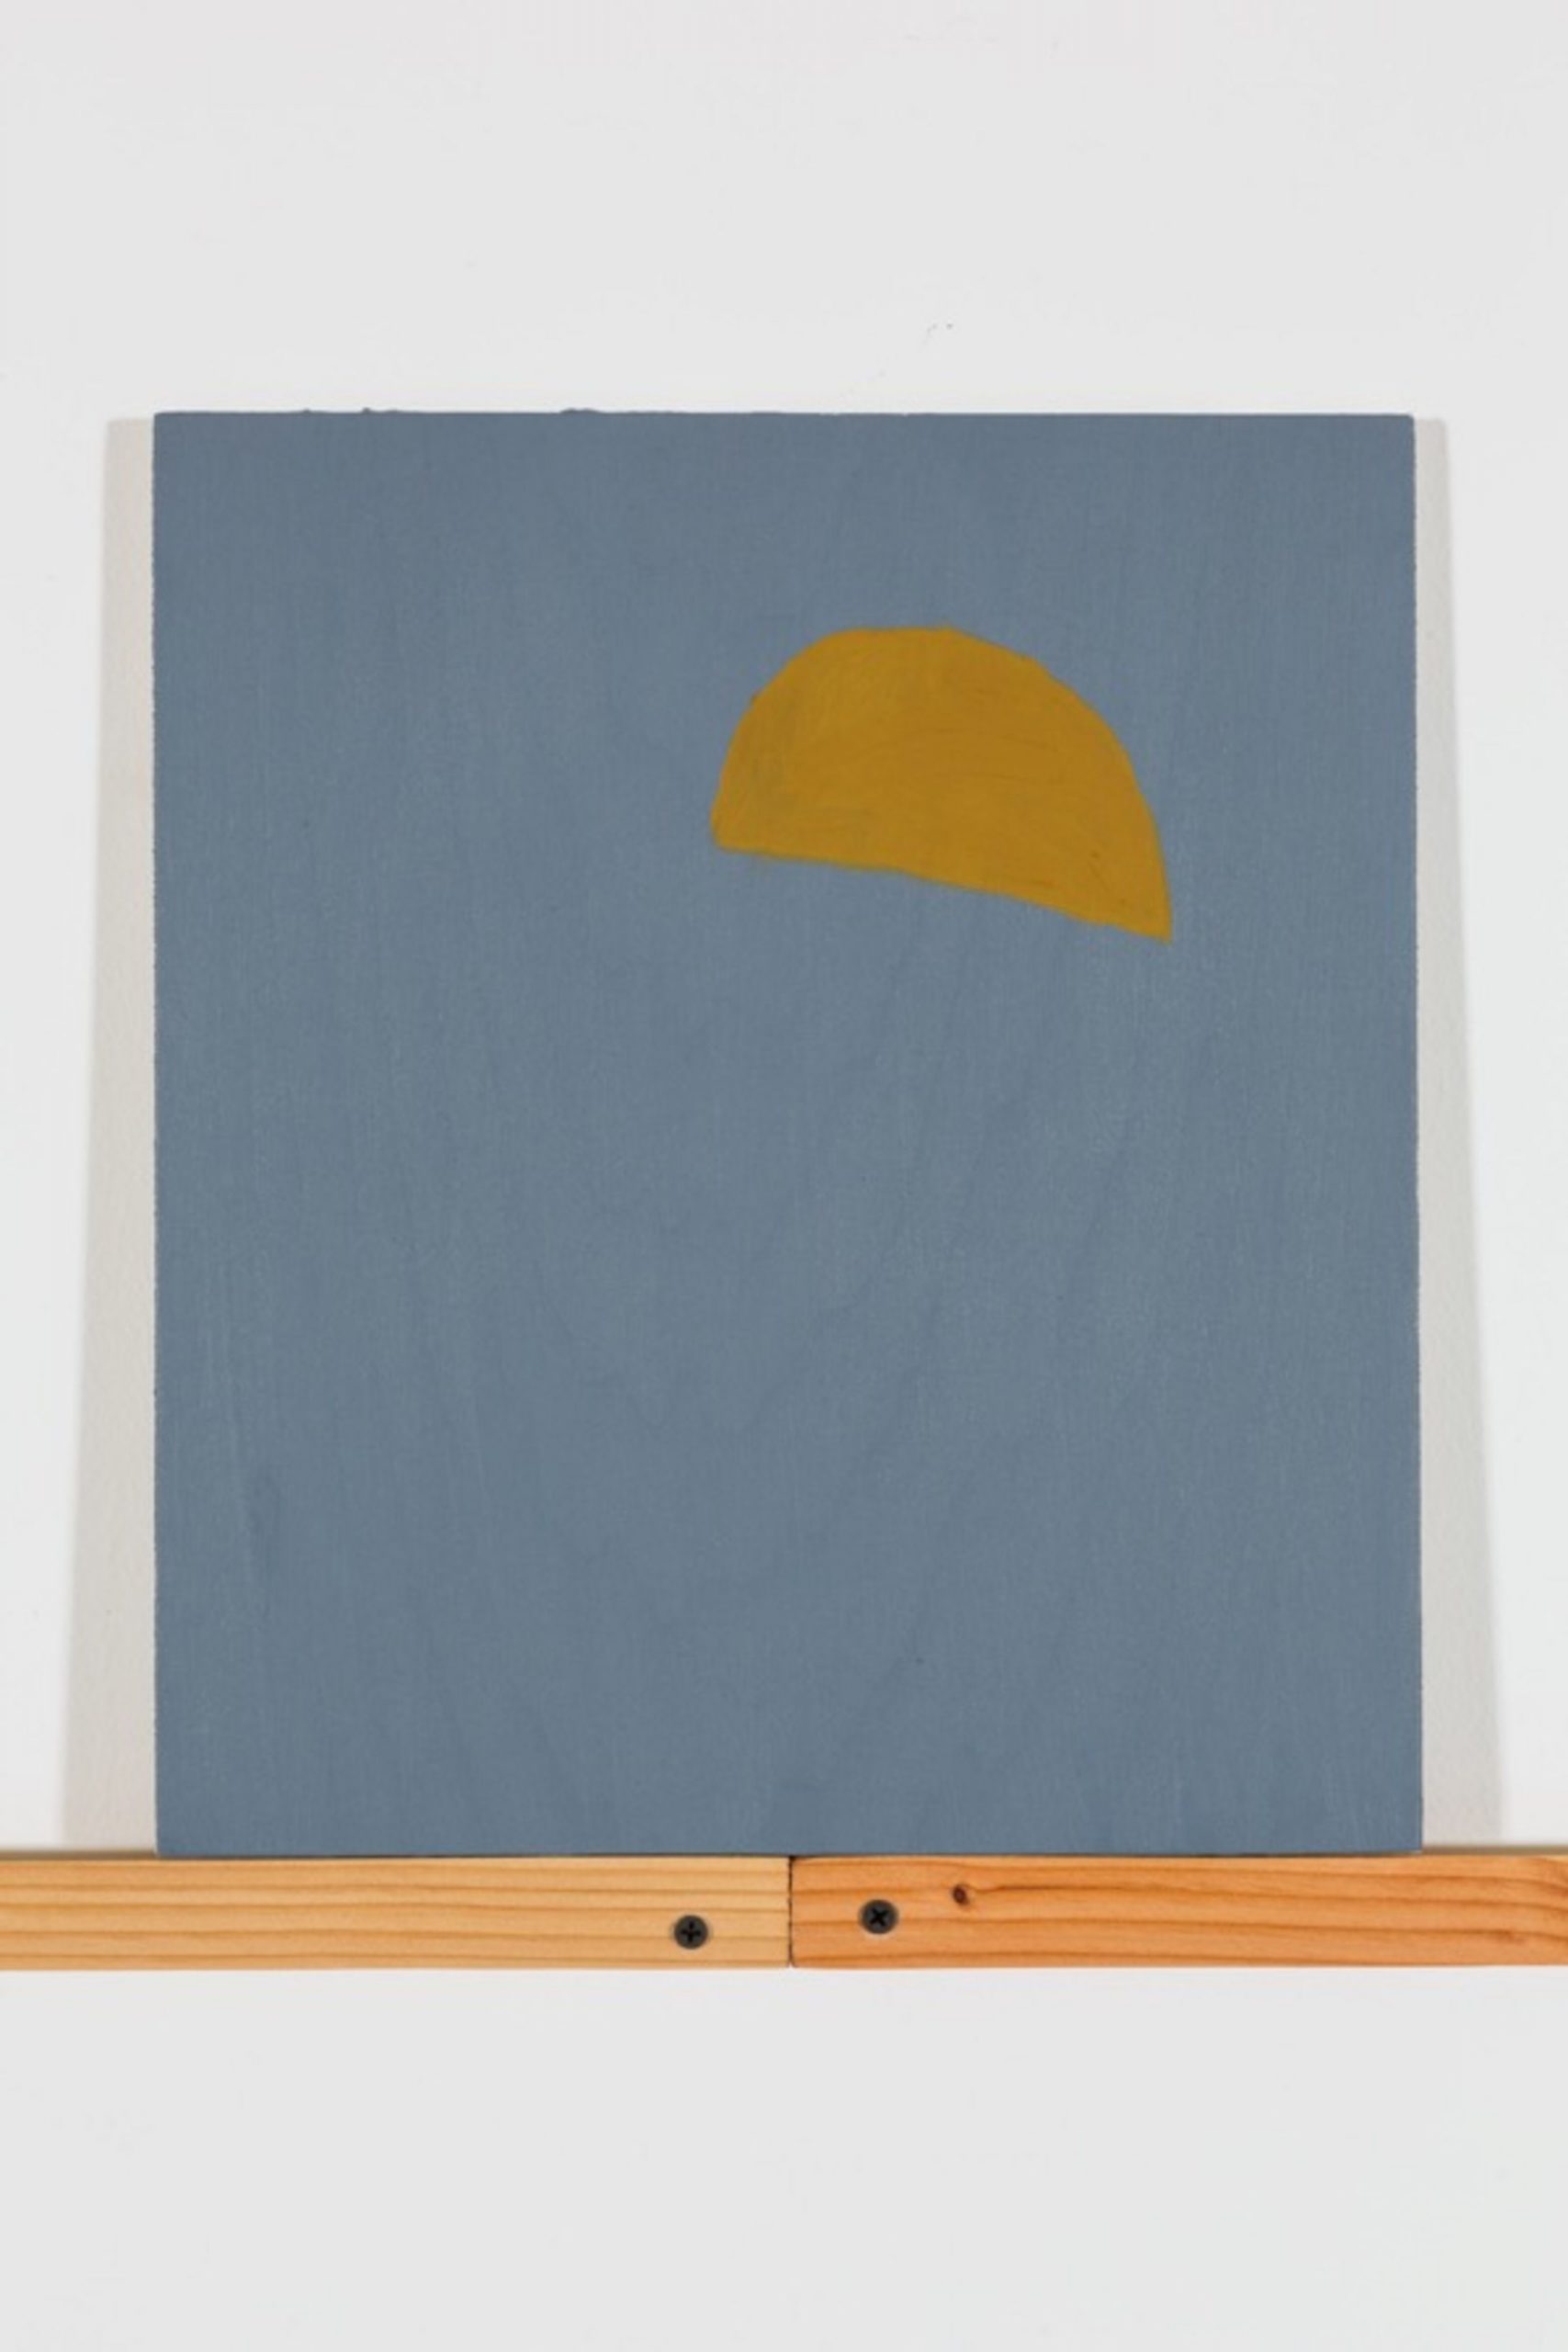 Painting by Seth Cameron titled Sun (1), exhibited at Nina Johnson.